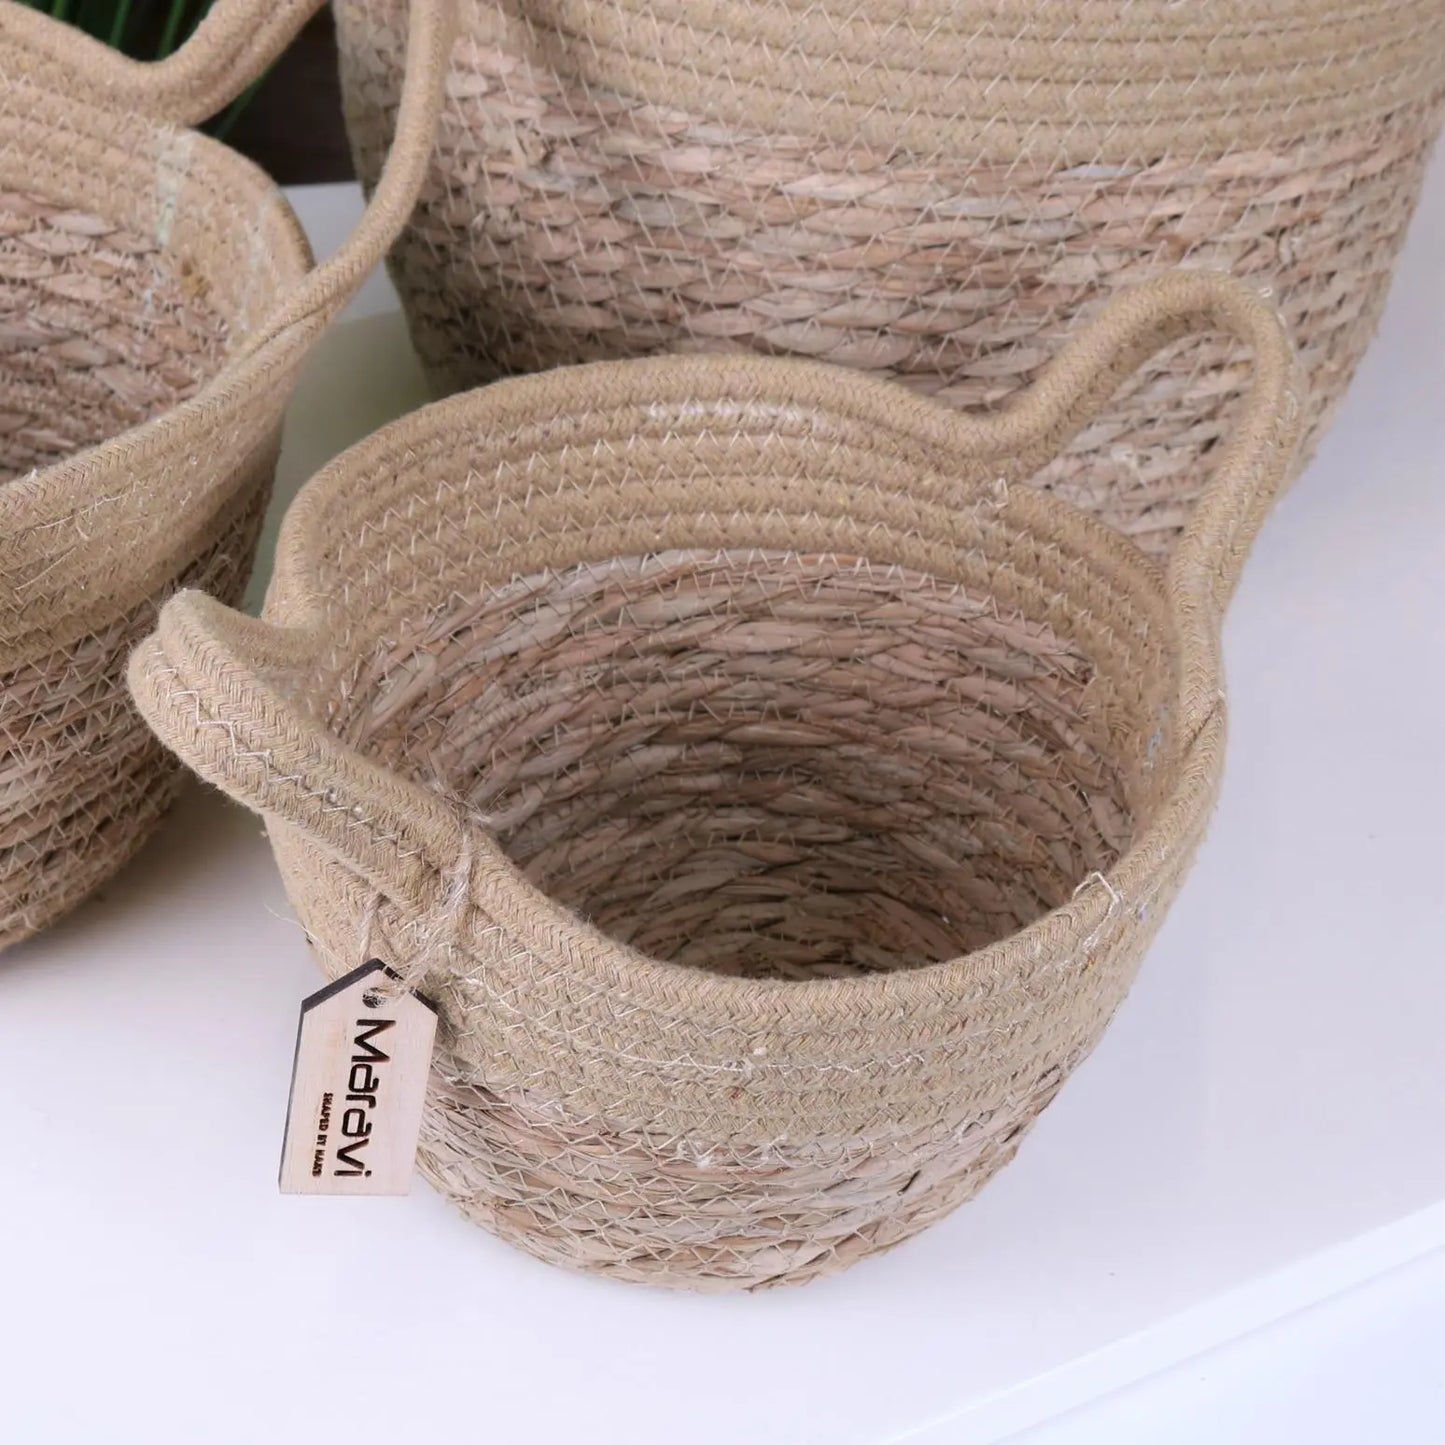 Sheyam Set of 3 Natural Rope Grass Baskets - Top View of Small Basket